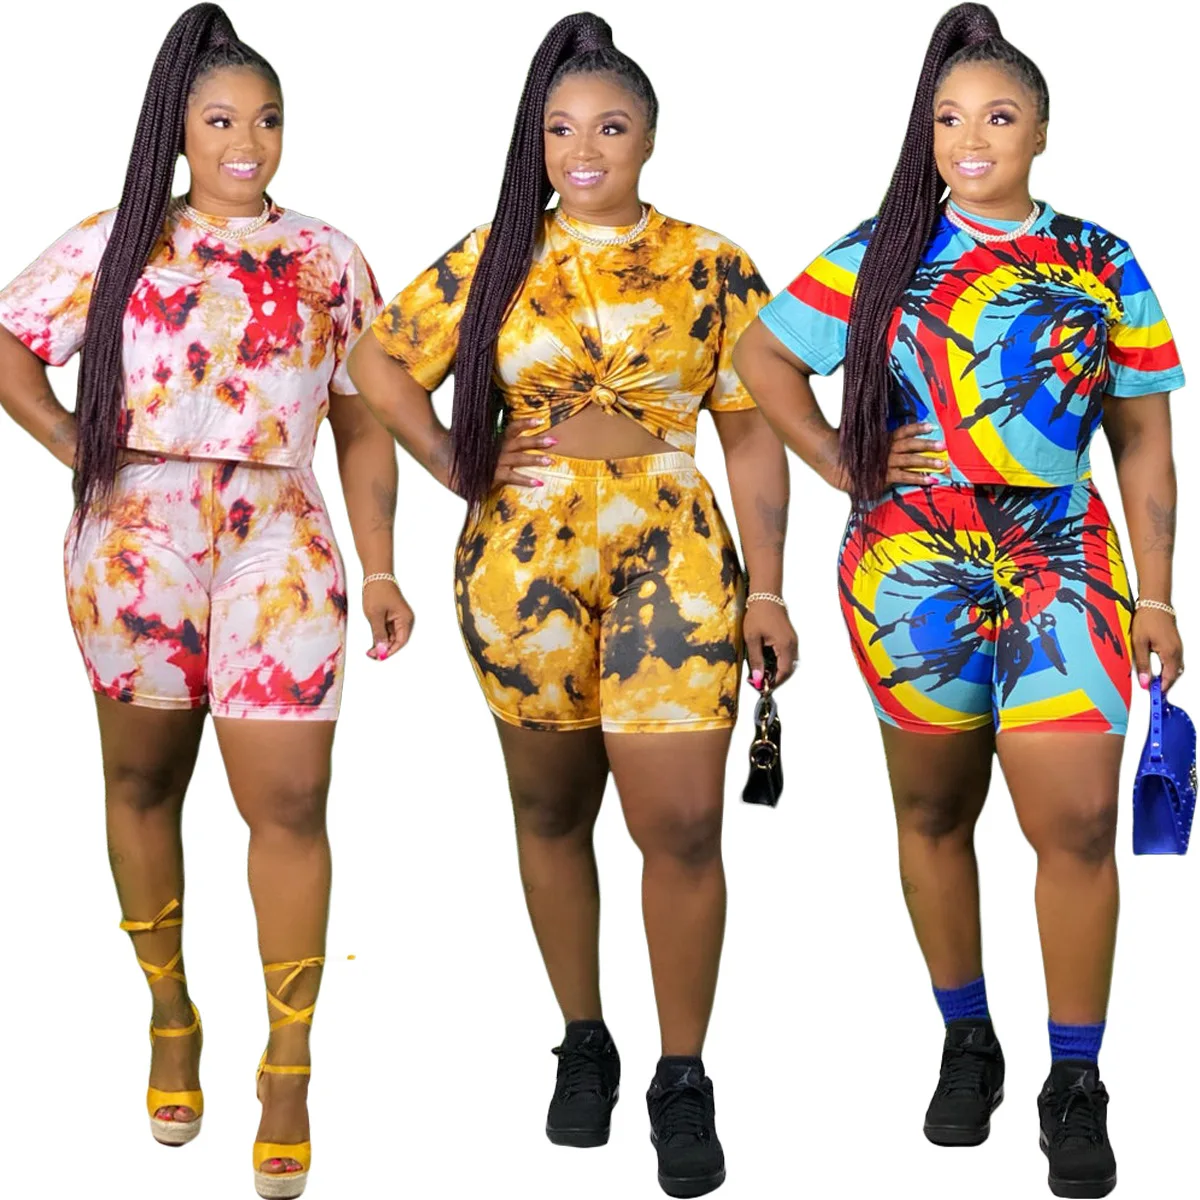 

Wholesale Amazon Hot Printed Plus Size Tracksuit Women's Short Sleeve Outfits Shorts Tie Dye Two Piece Short Set, Shown